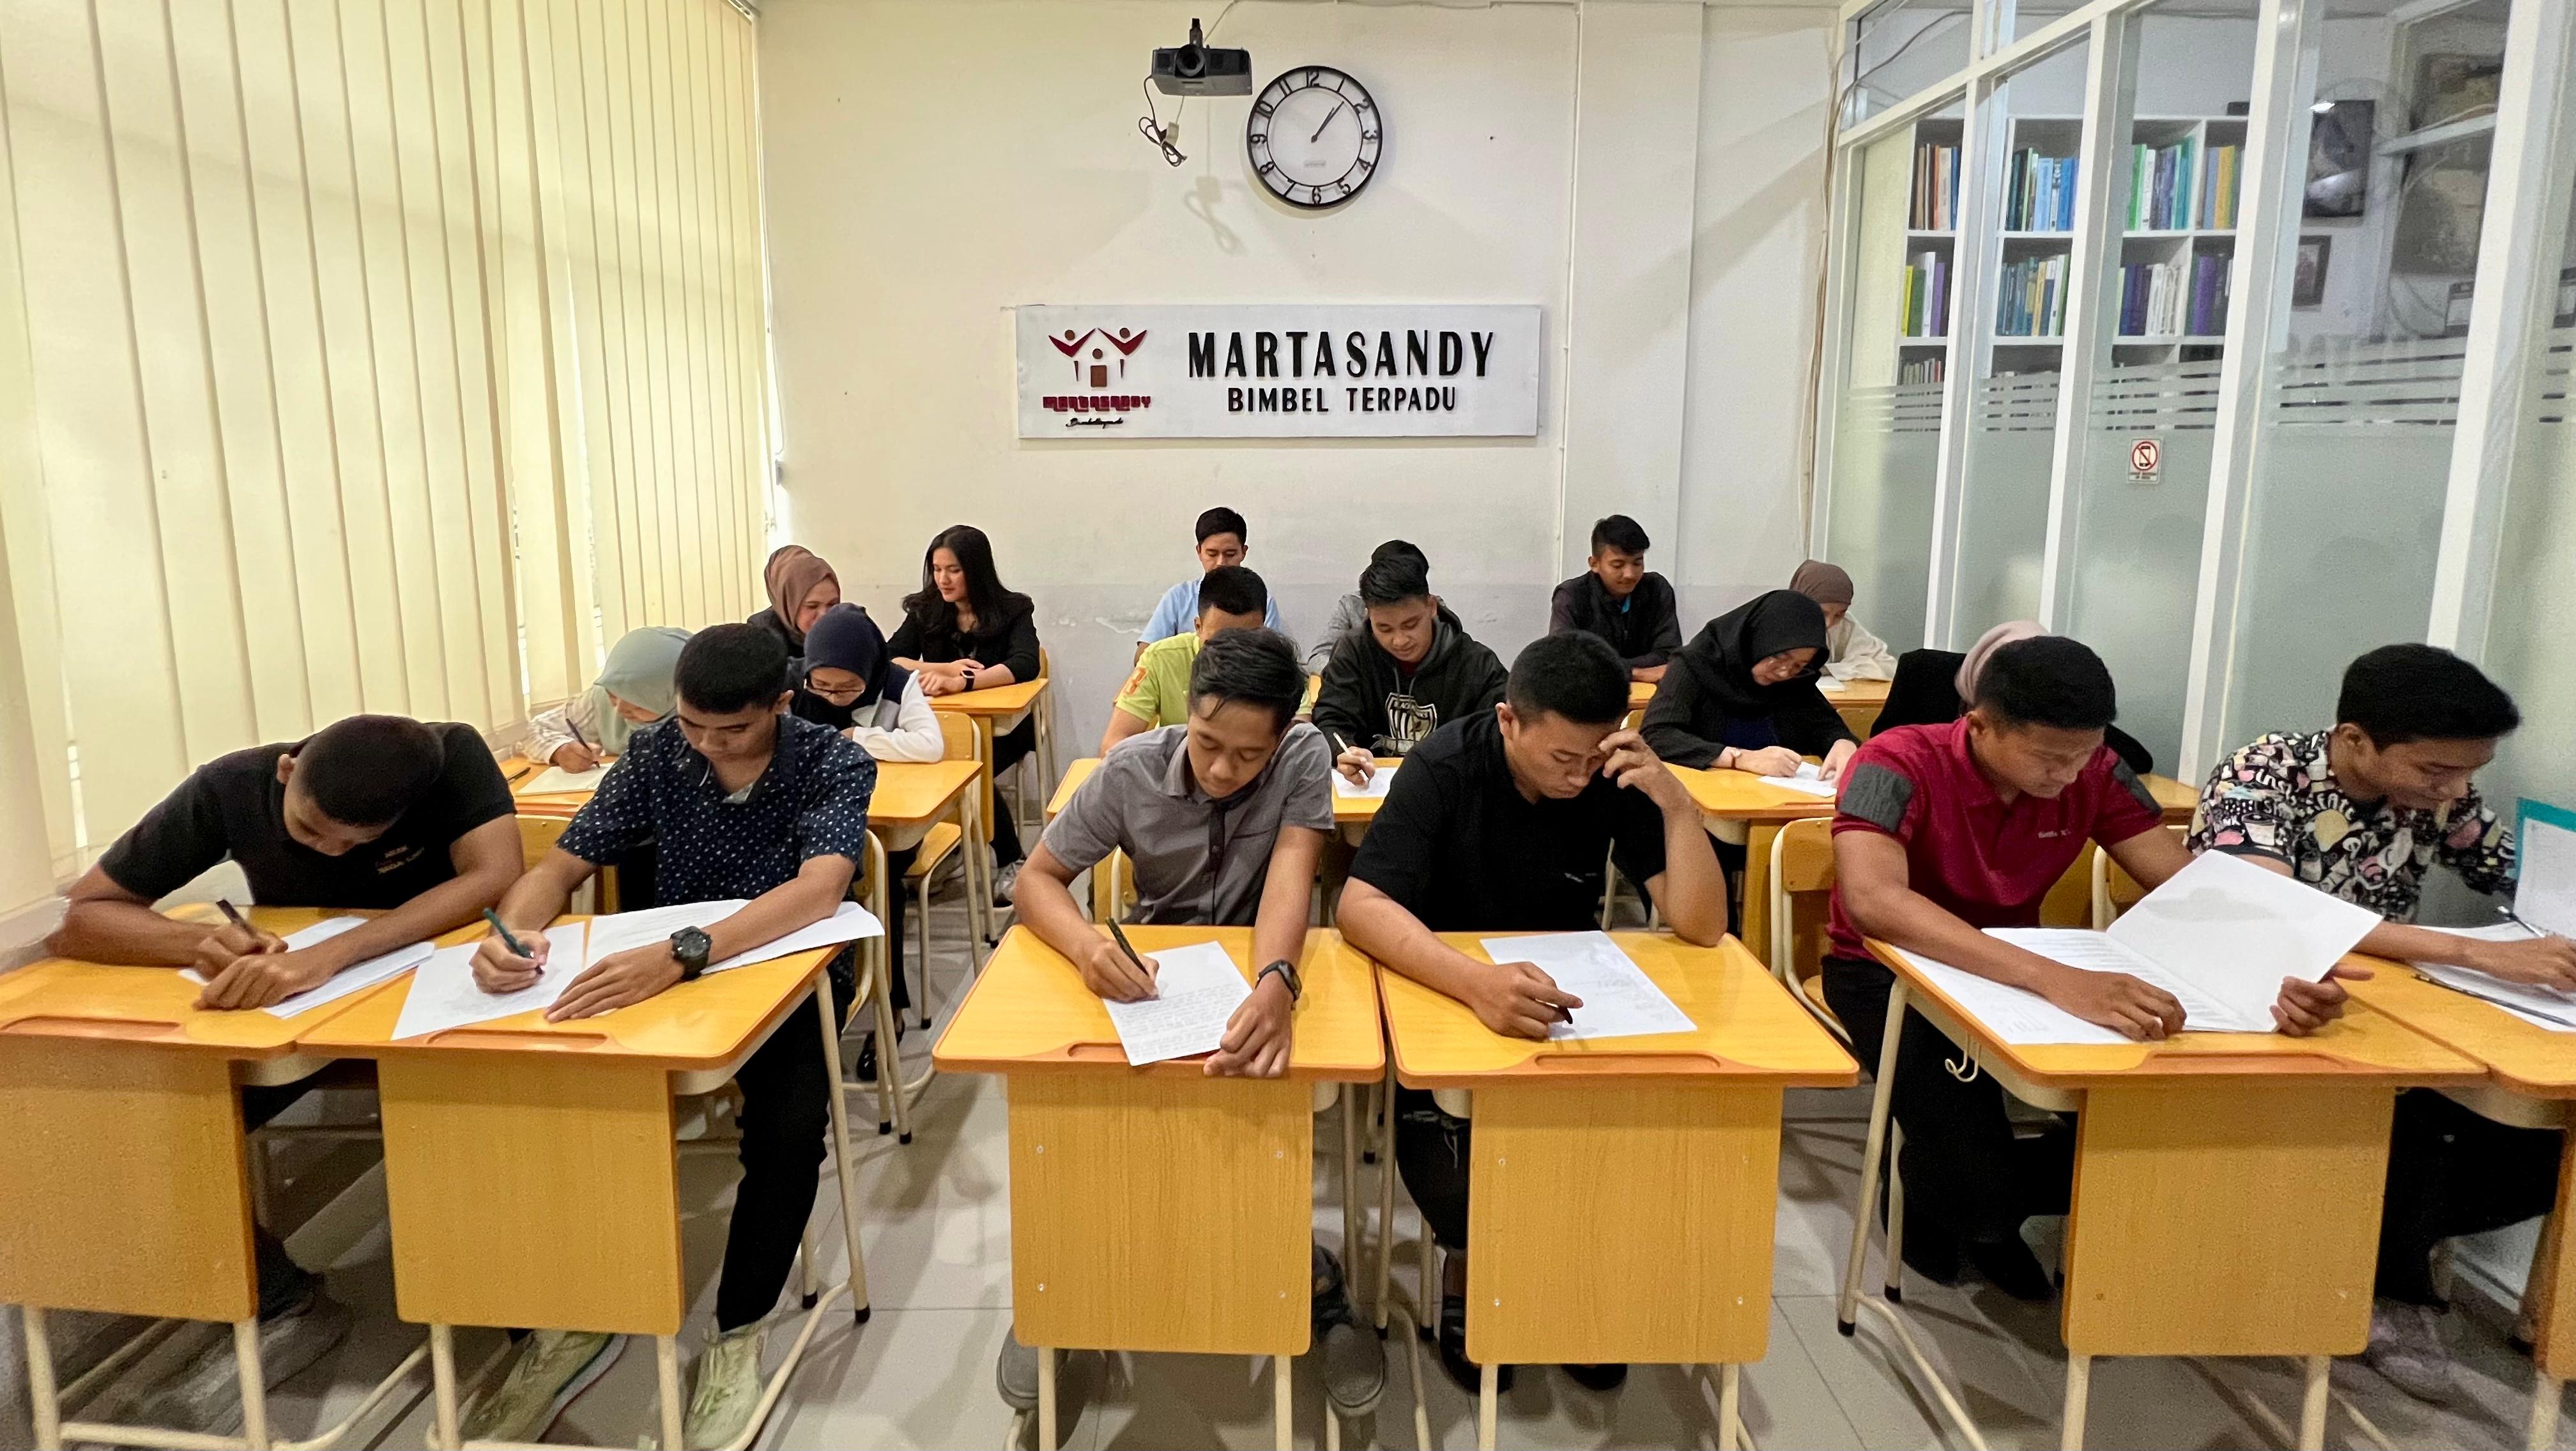 Martasandy Bimbel Terpadu Buka Layanan Screening Test Akademik Gratis bagi Calon Aparatur Negara